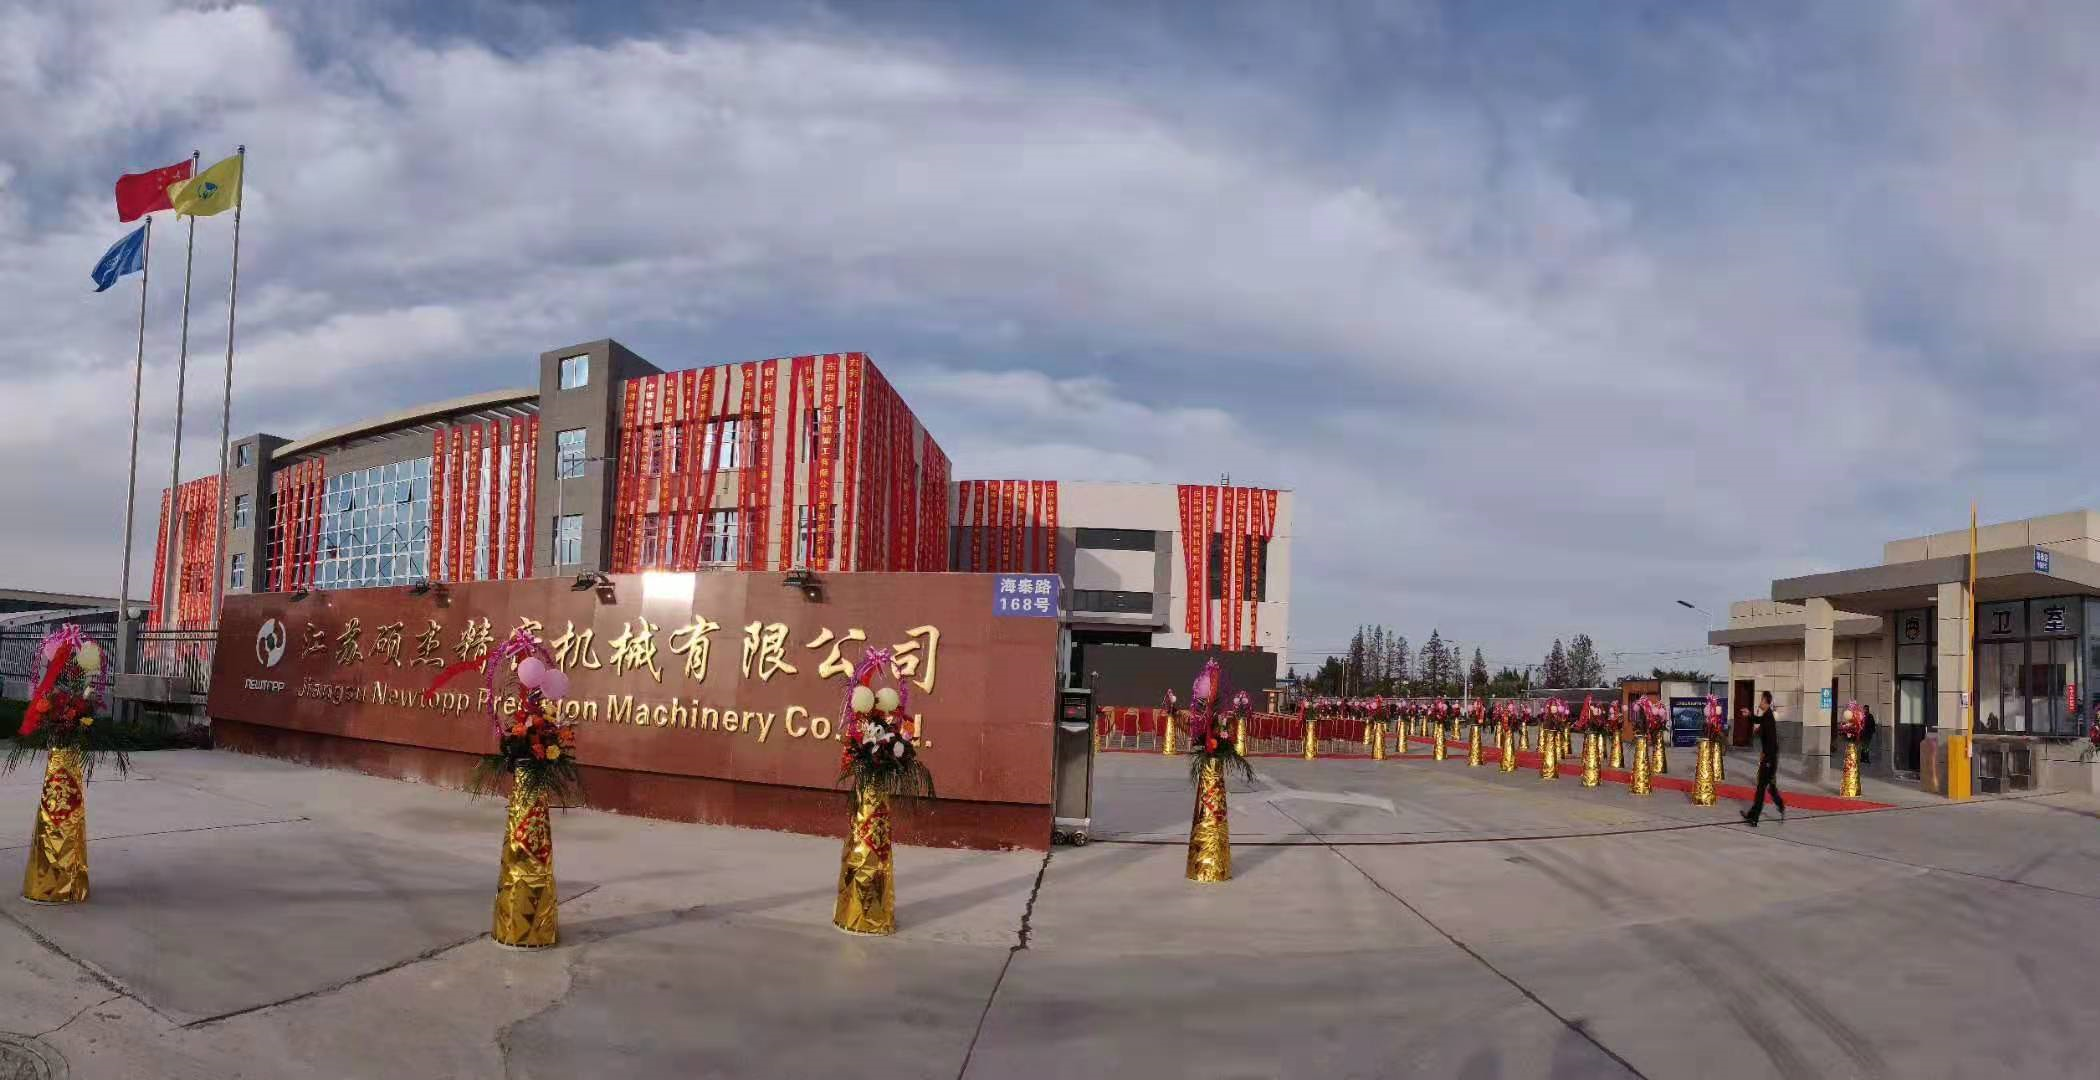 Jiangsu NewTopp Precision Machinery Co.,Ltd. was also established in 2019